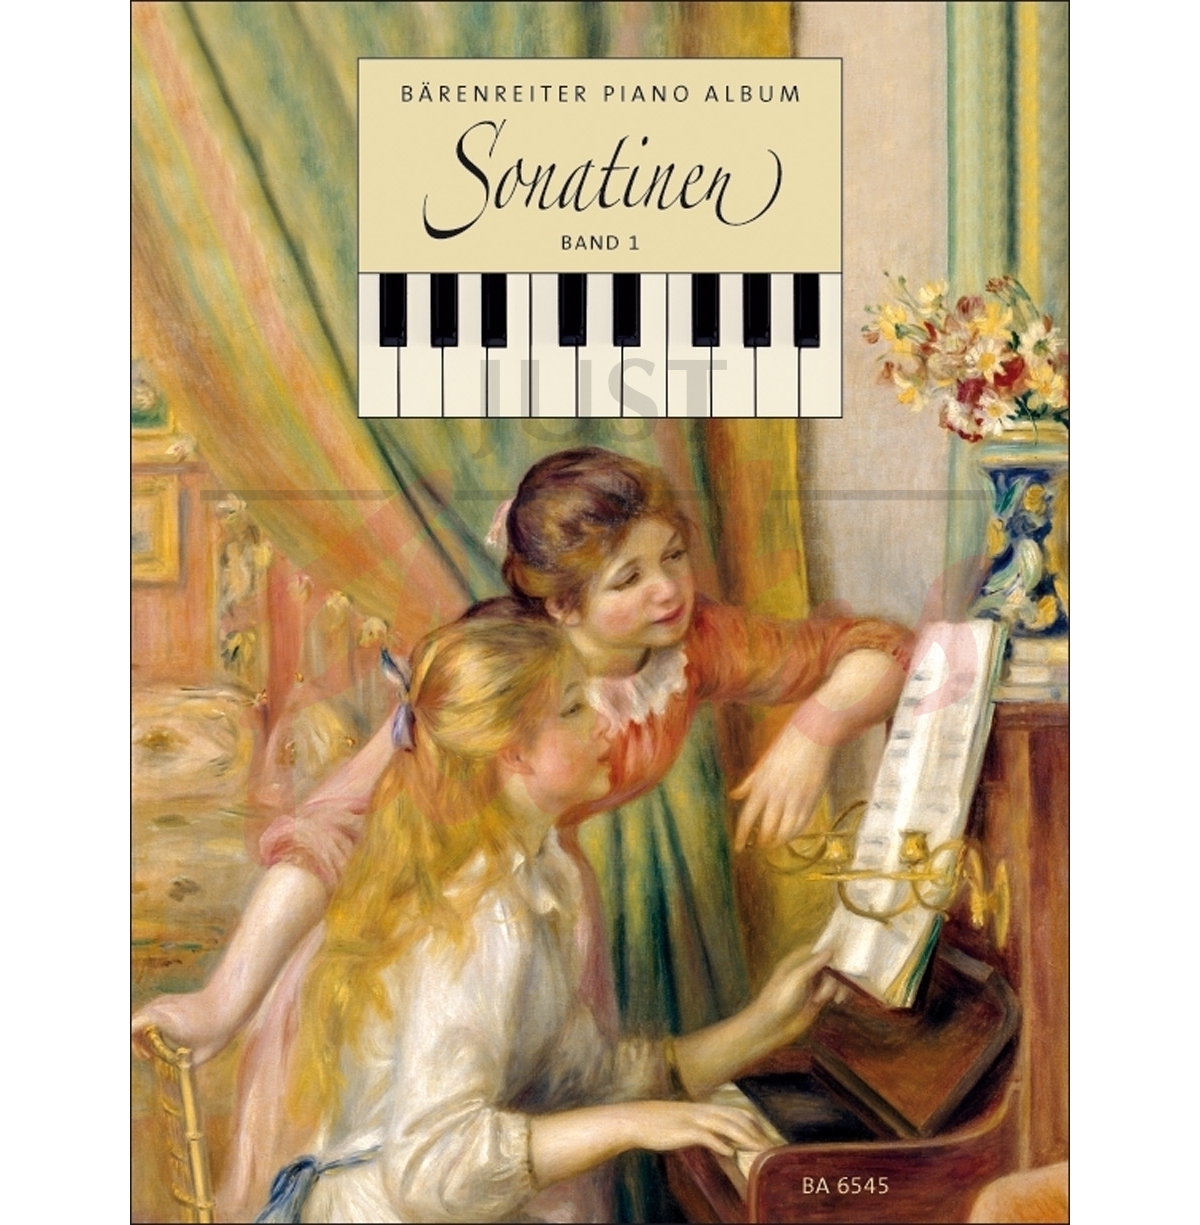 Barenreiter Piano Album: Sonatinas, Book 1